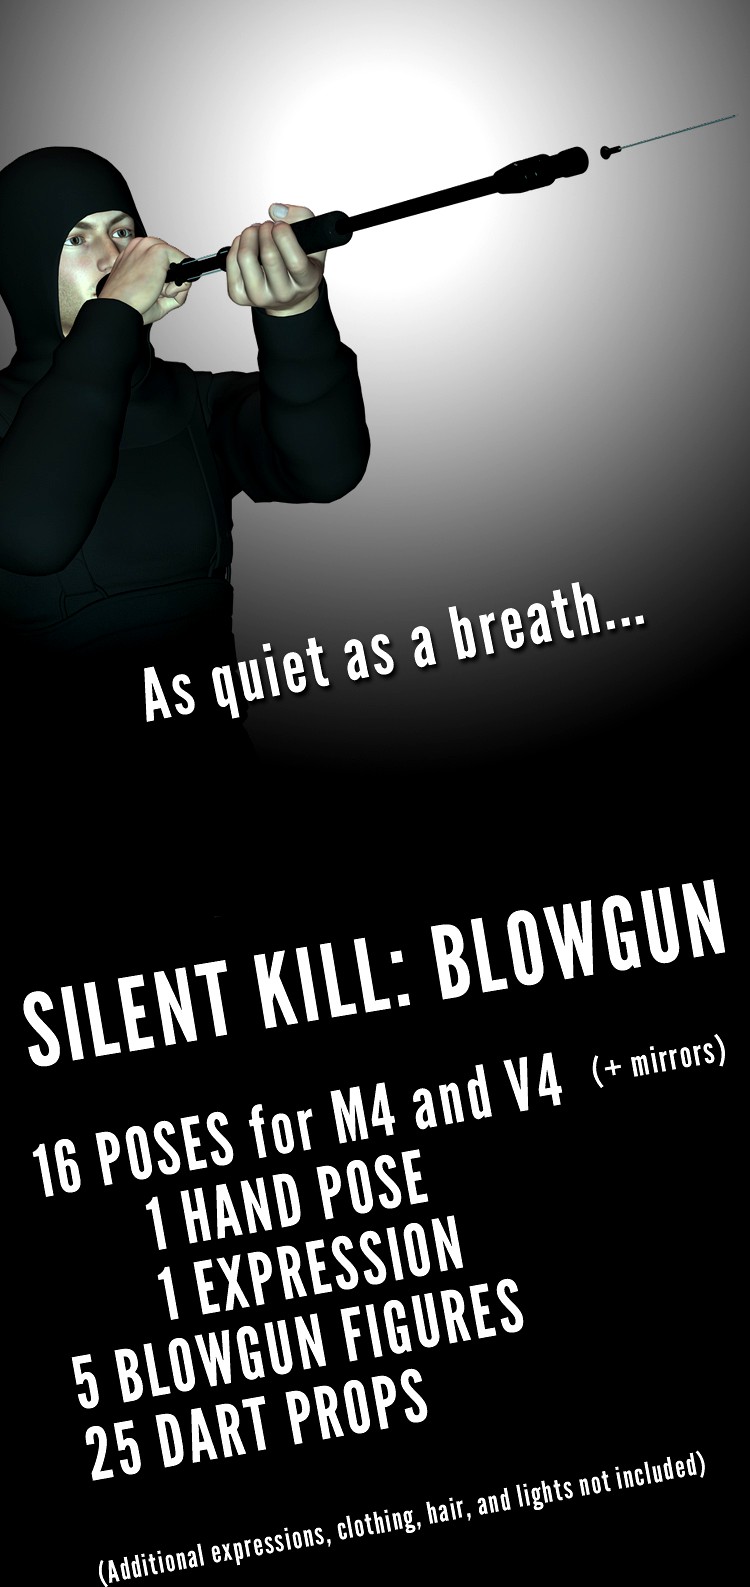 Silent Kill: Blowgun Poses